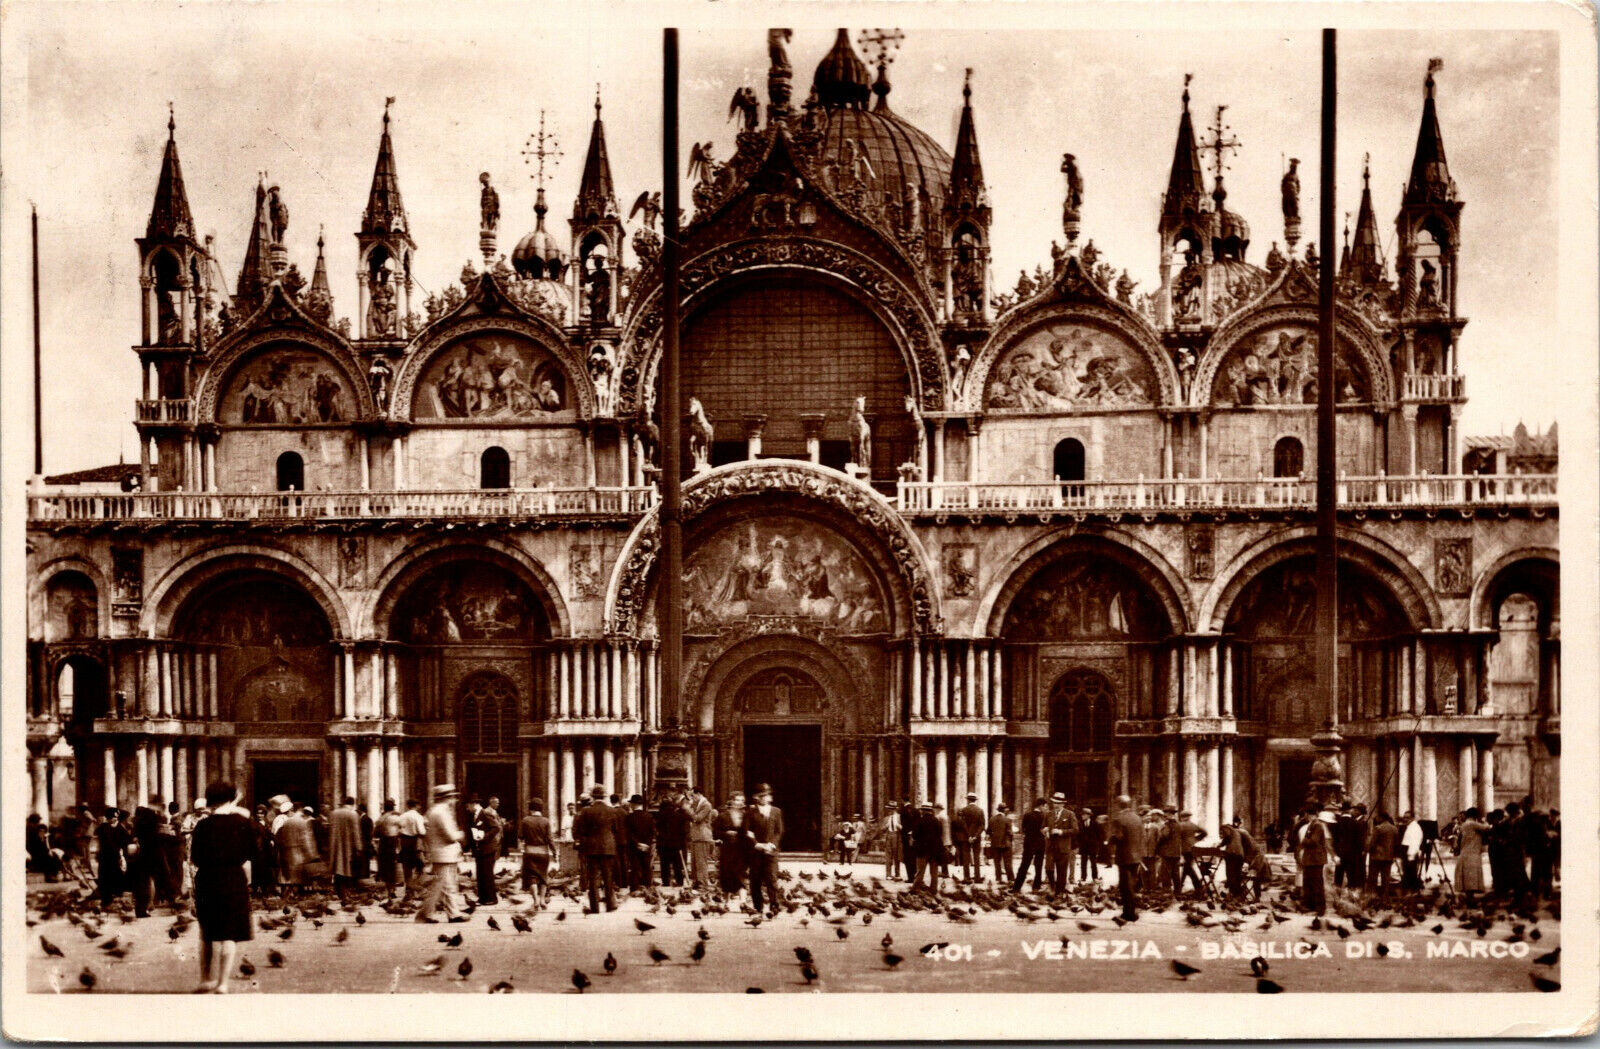 Vtg 1940s Venezia Basilica Di San Marco Venice Italy RPPC Real Photo Postcard